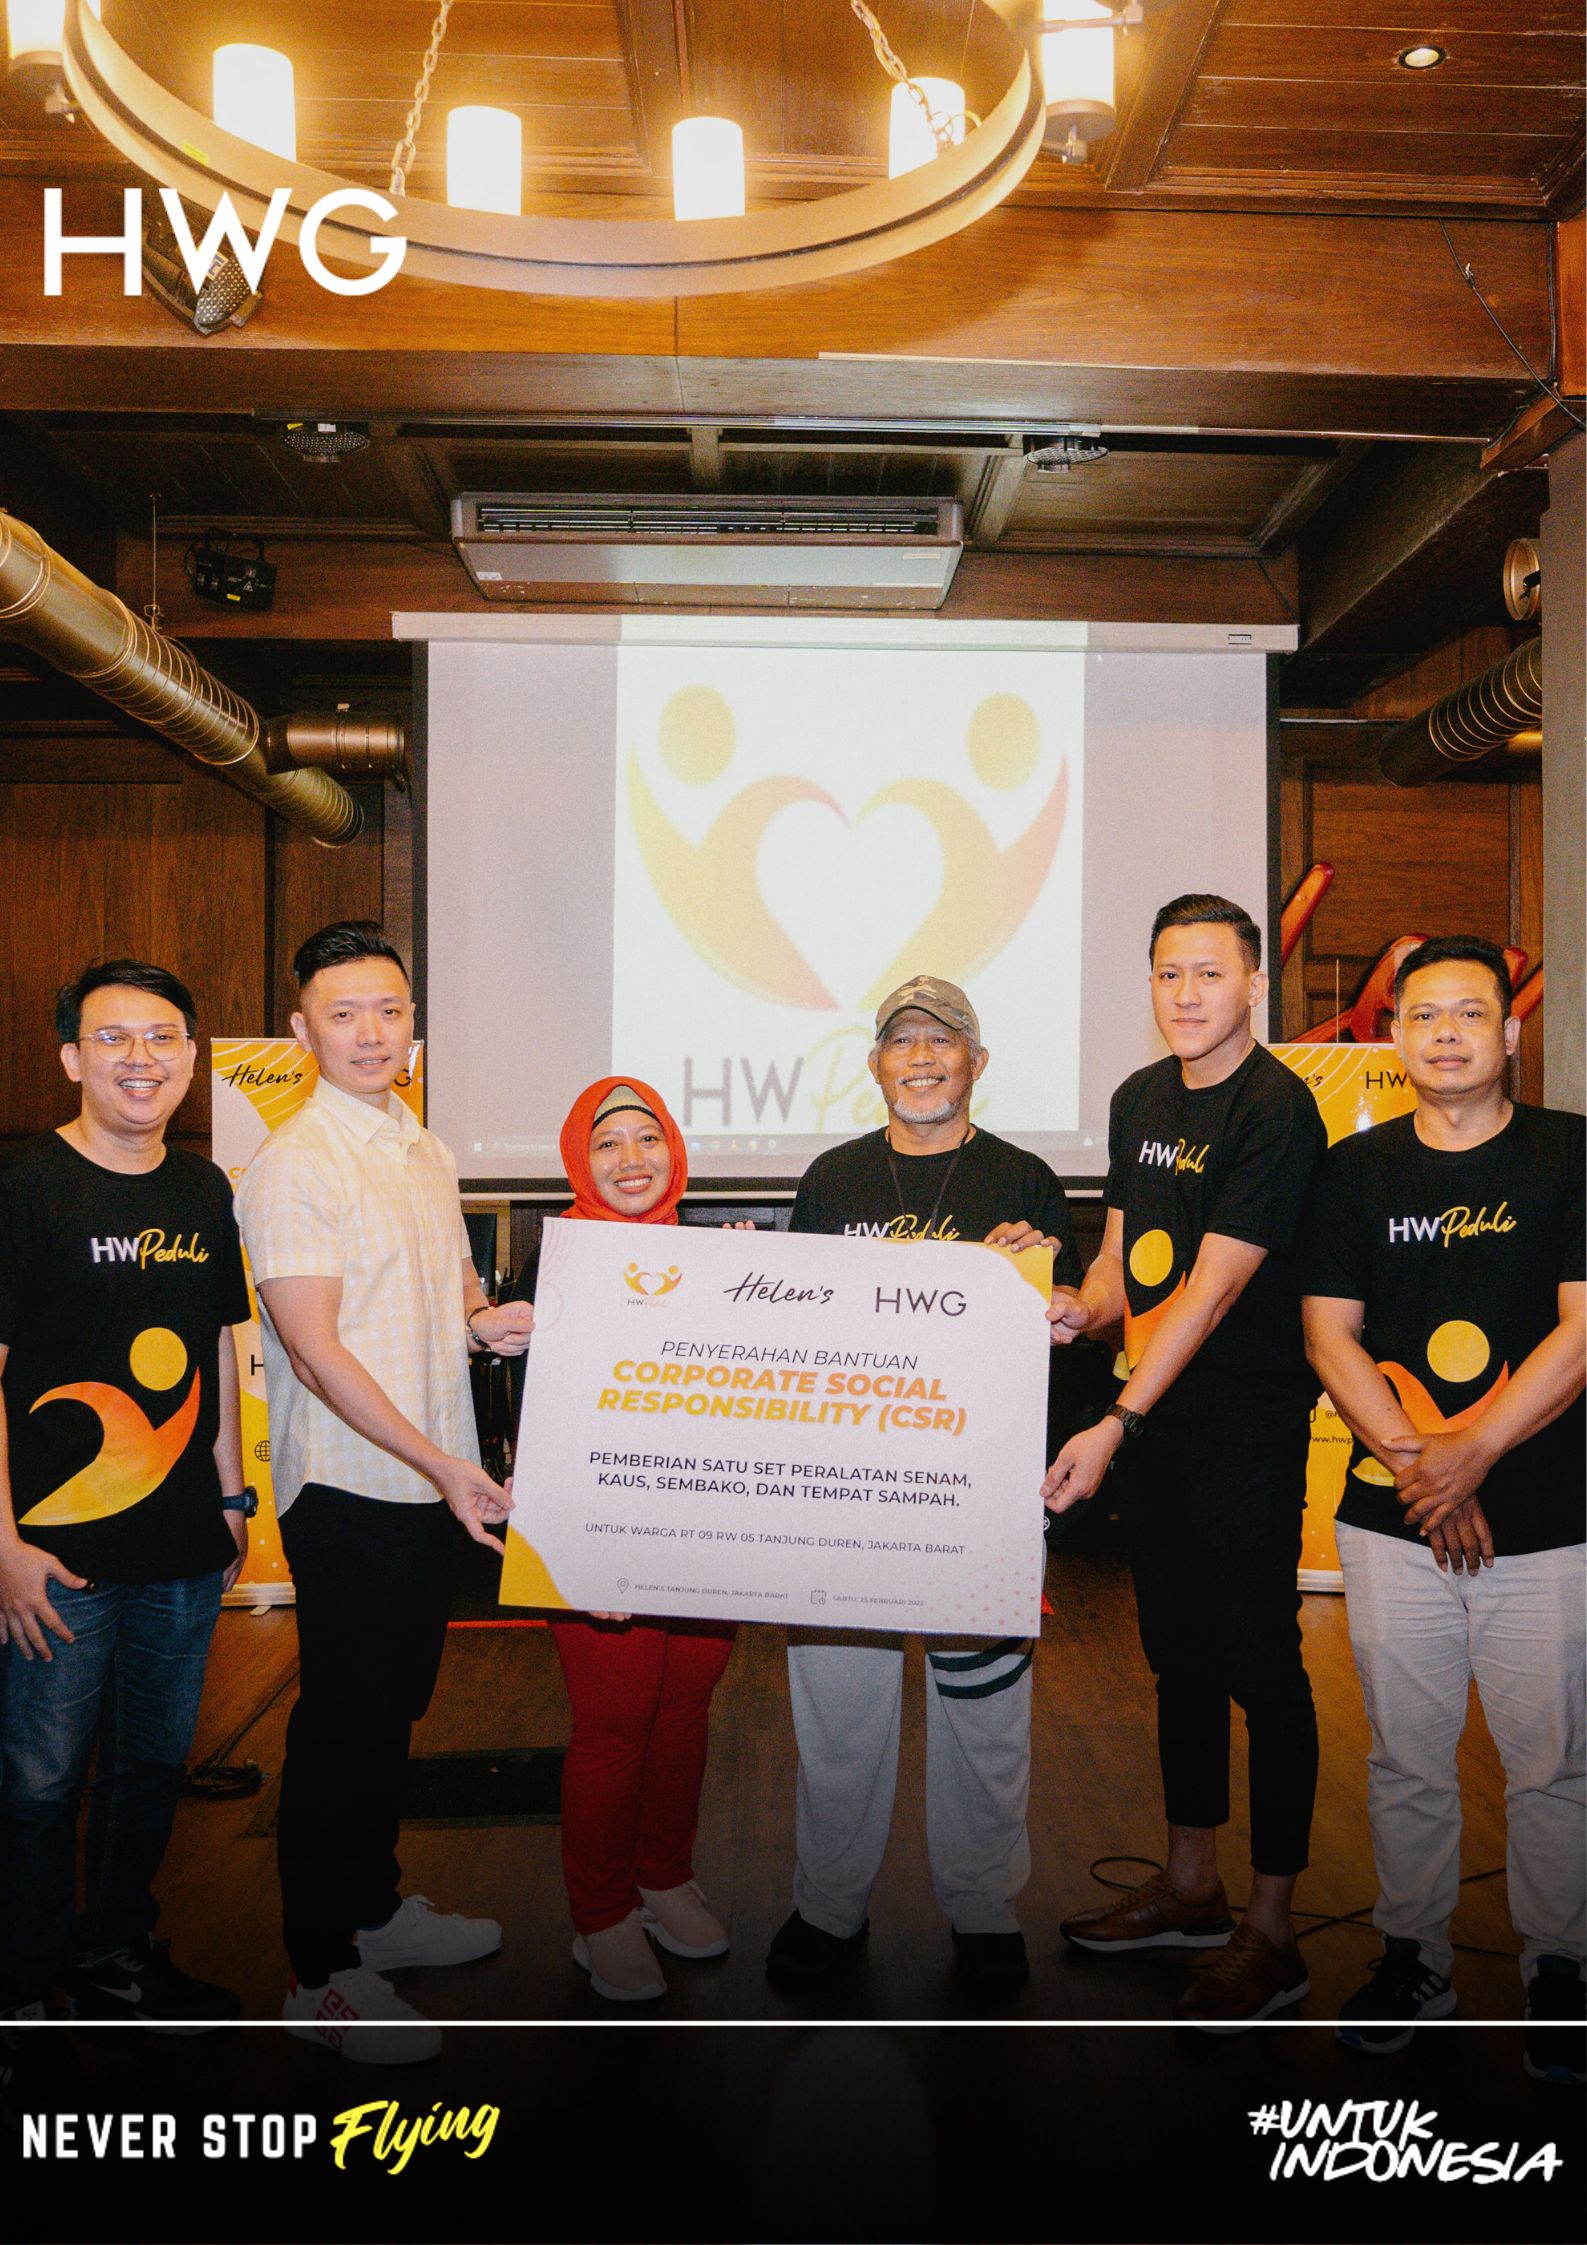 HW Group establishes initial CSR HW Peduli in Jakarta